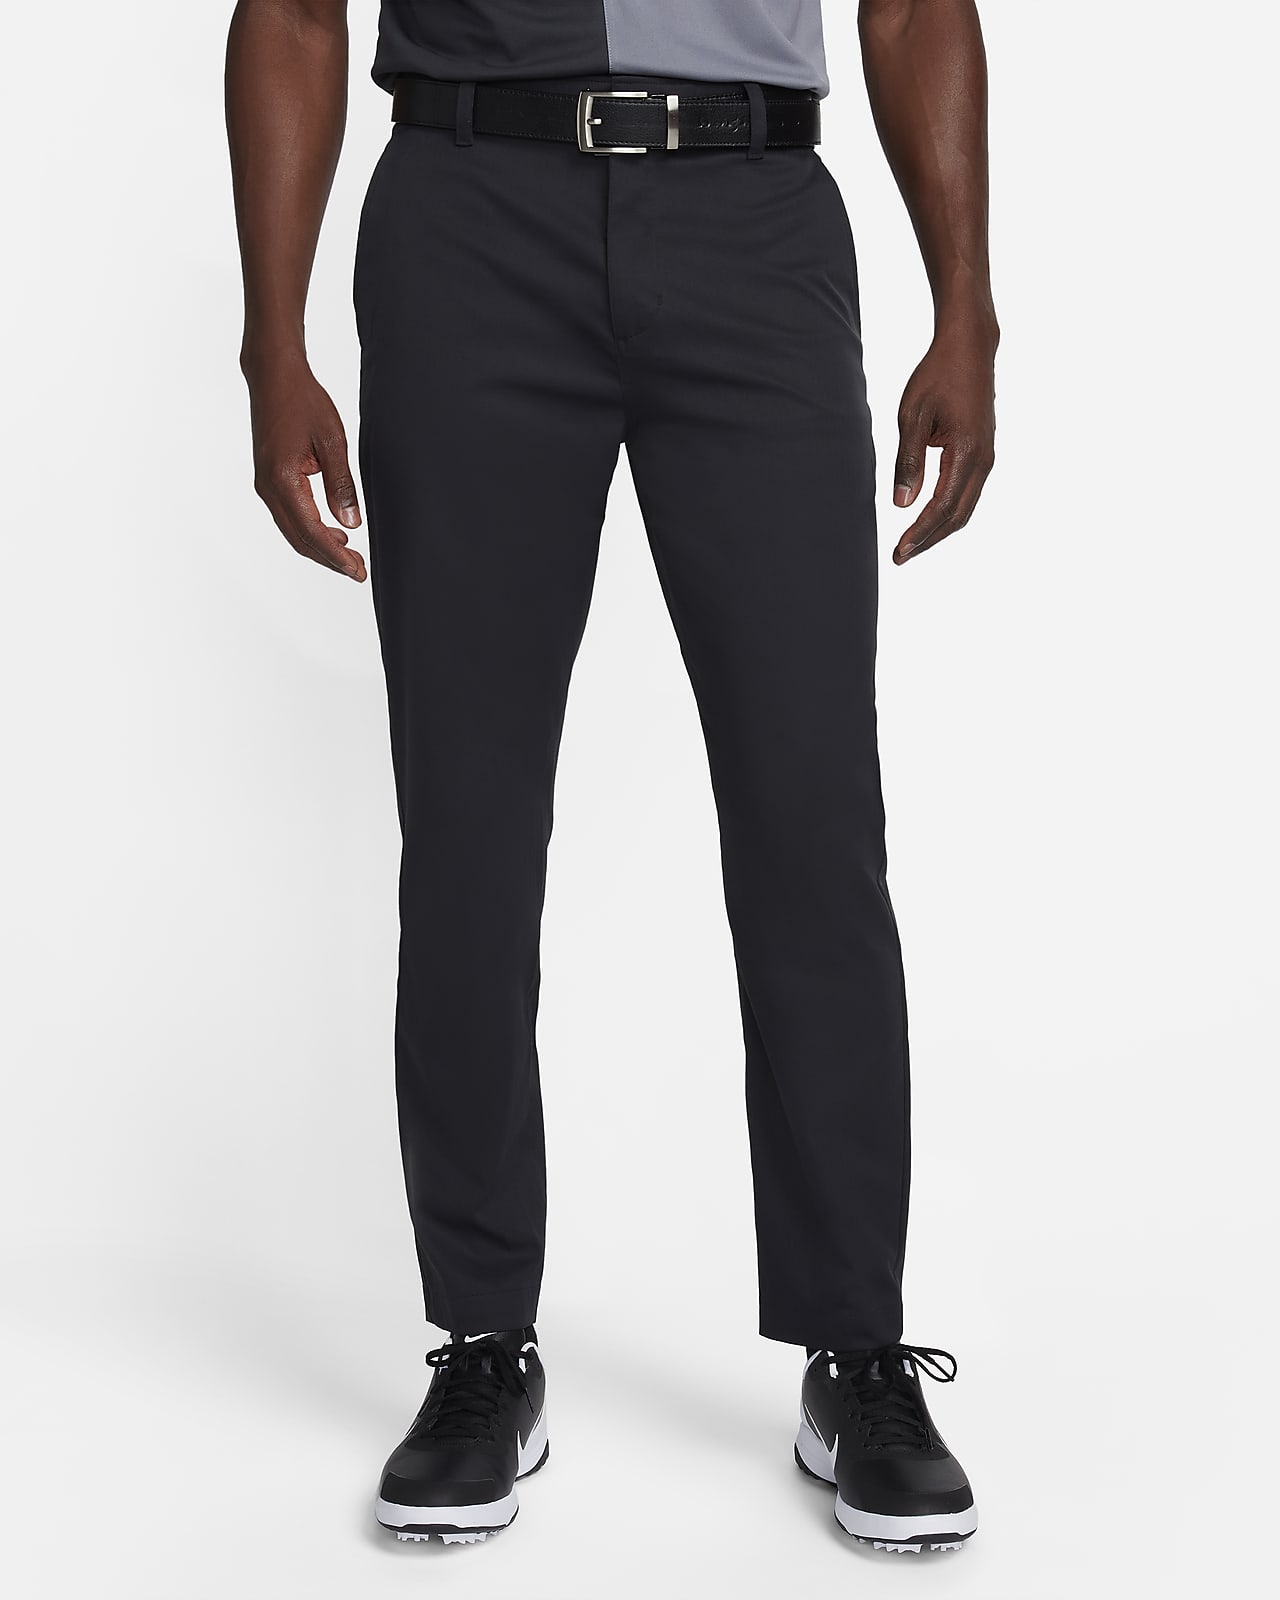 Nike Tour Repel Men's Chino Slim Golf Trousers